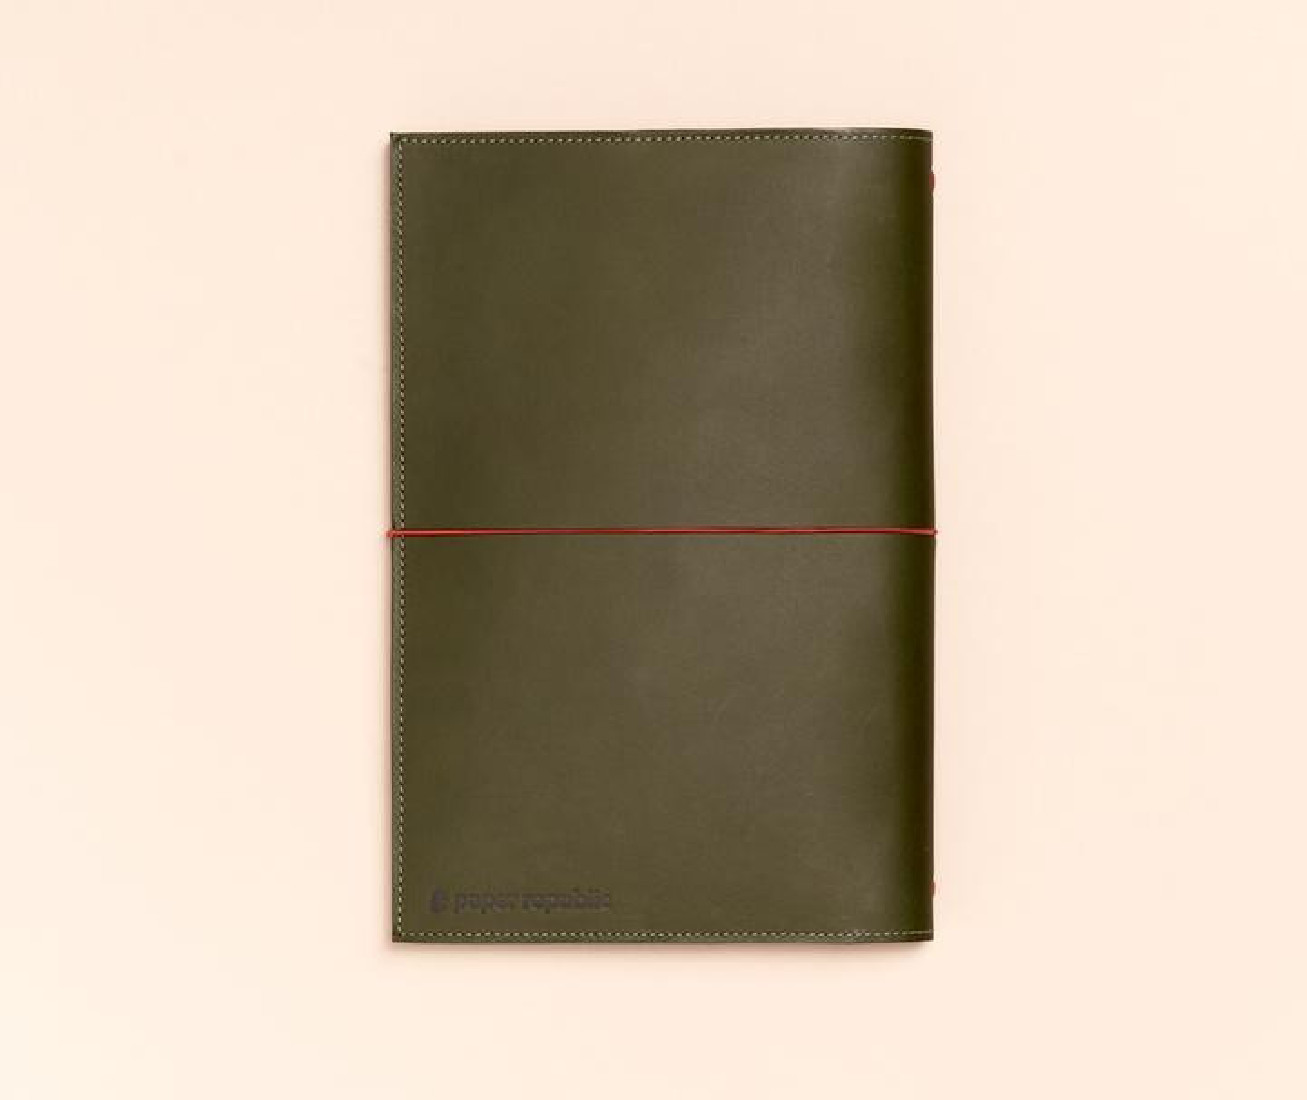 Paper Republic A5 Leather Portfolio Olive Green